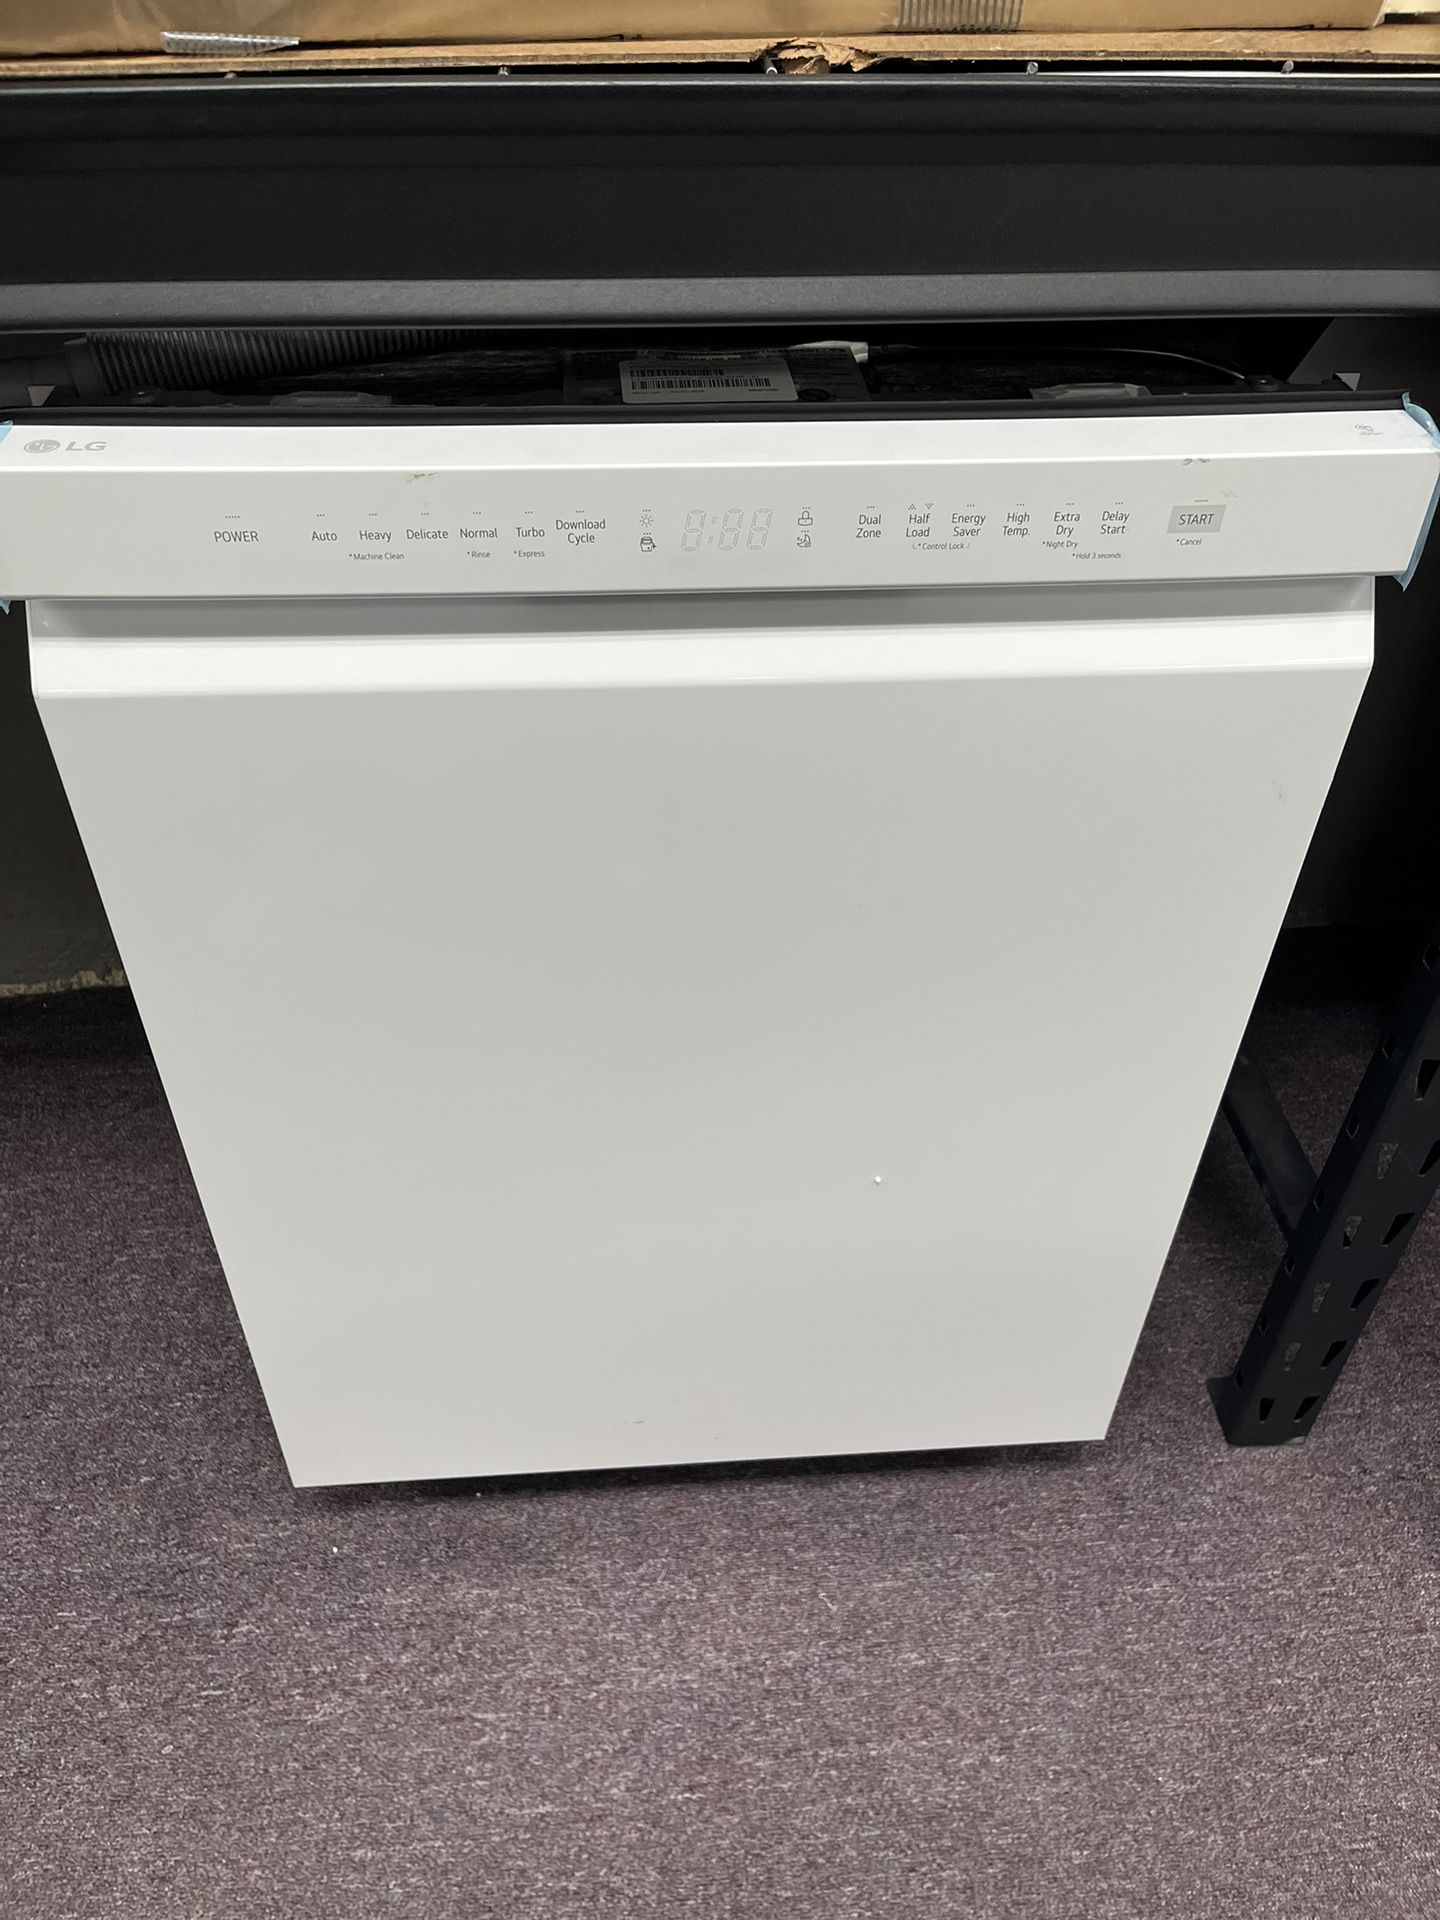 Dishwasher-LG Open Box Dishwasher With 1 Year Warranty 